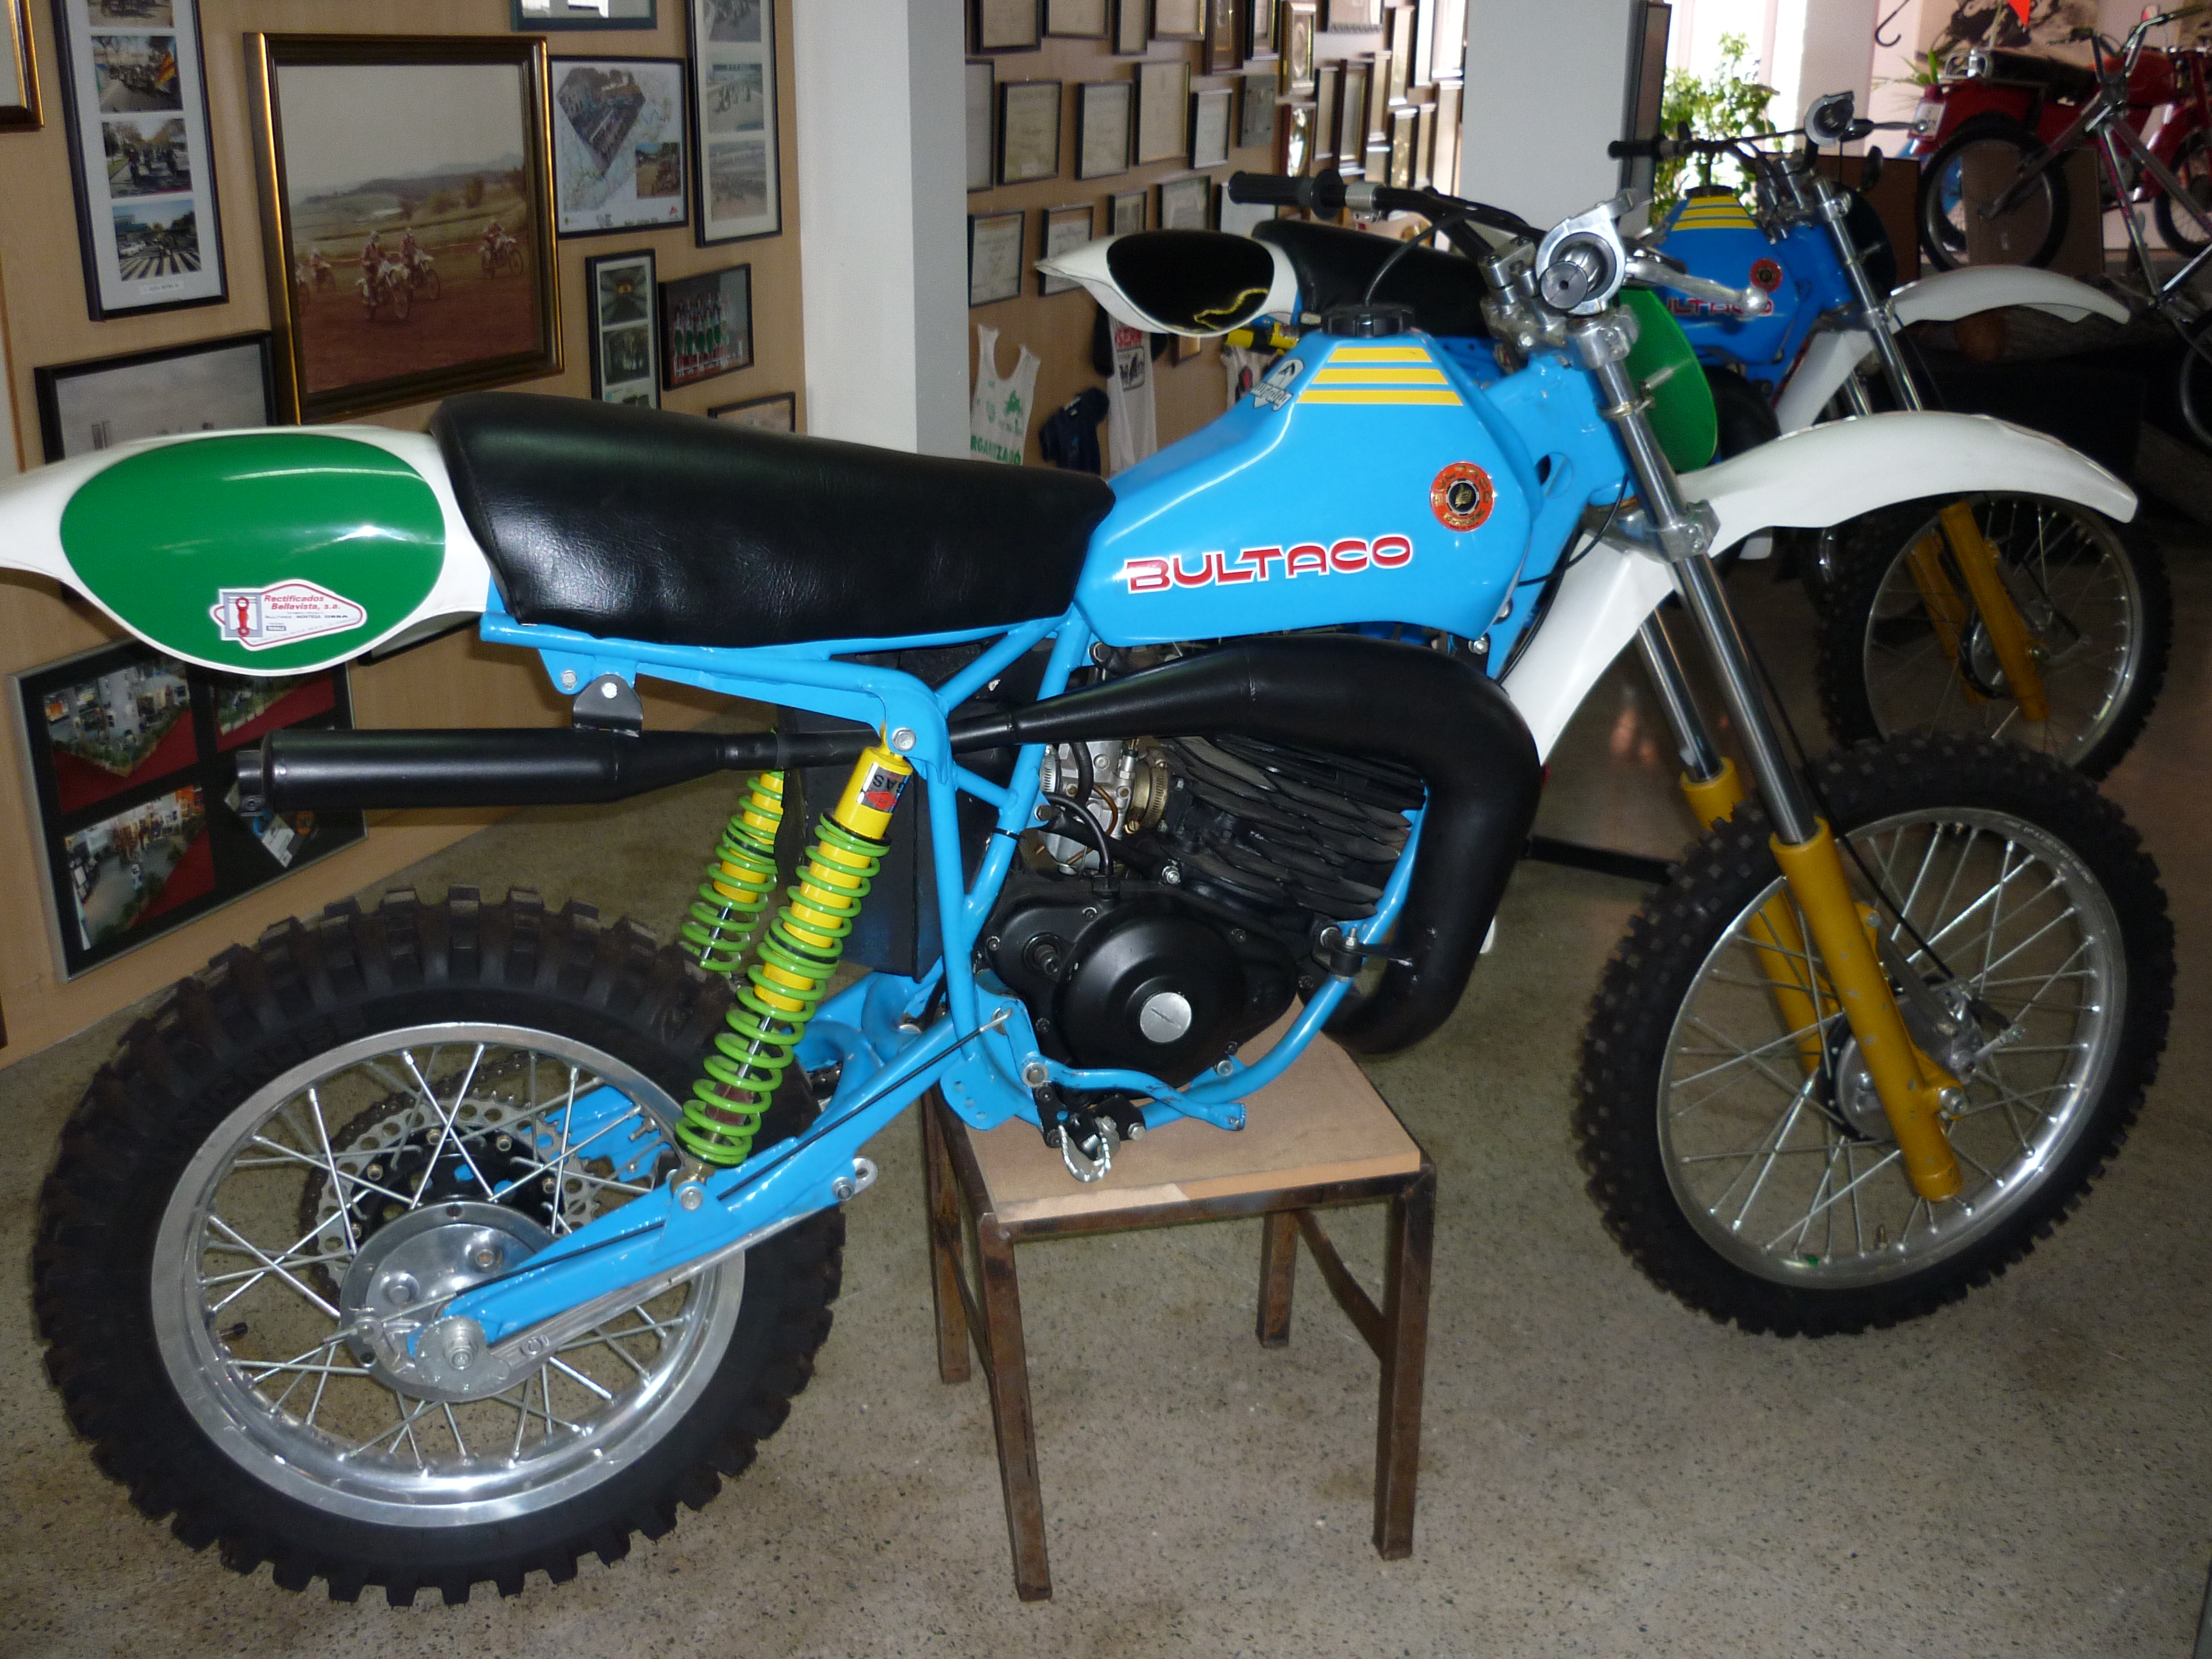 File:Bultaco Pursang MK15 250cc 1980 prototype c.jpg - Wikimedia ...